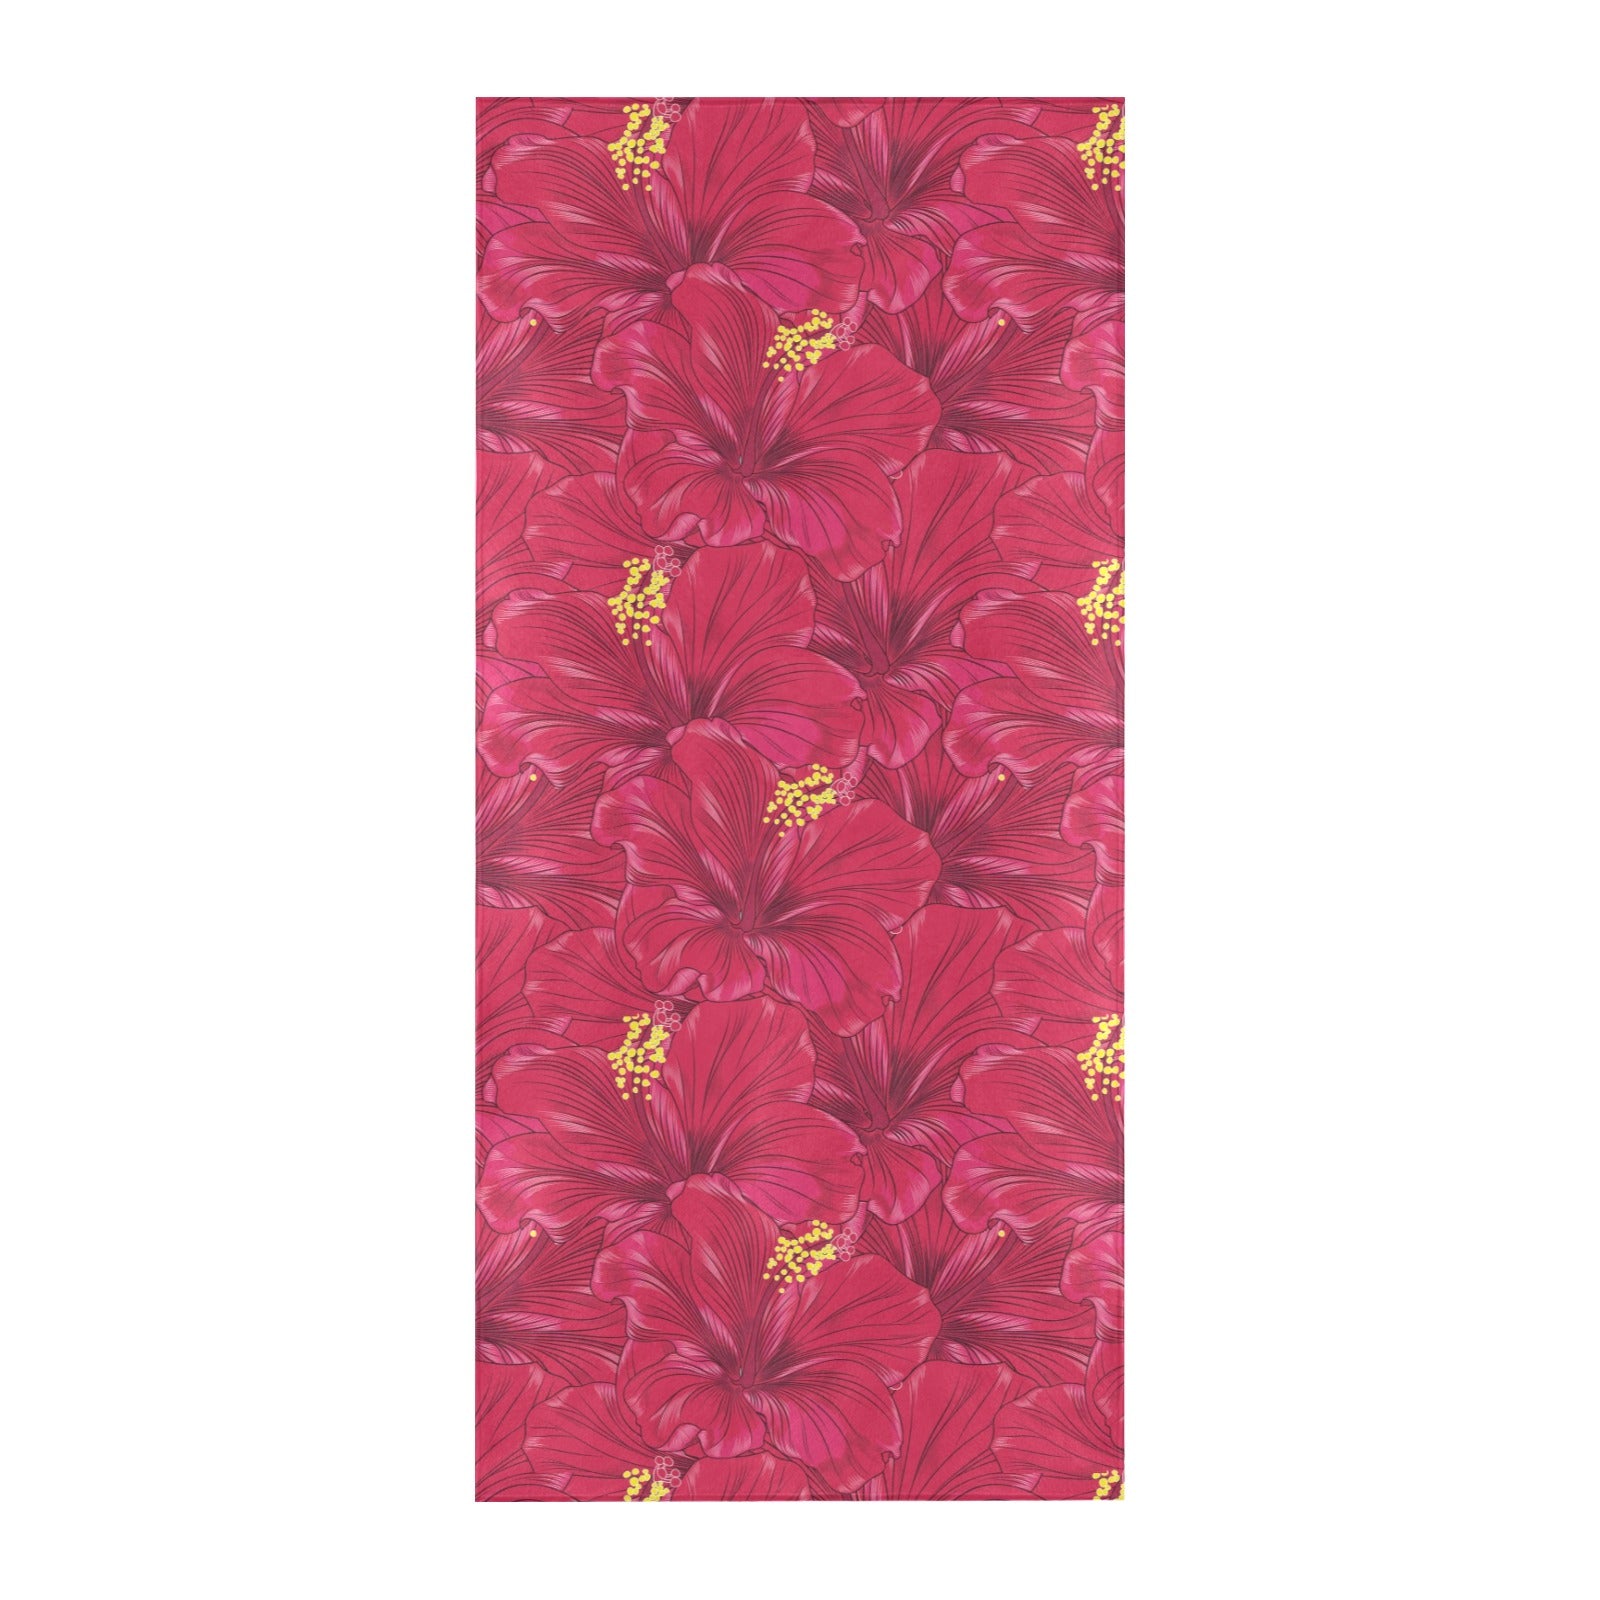 Hibiscus Red Pattern Print LKS308 Beach Towel 32" x 71"